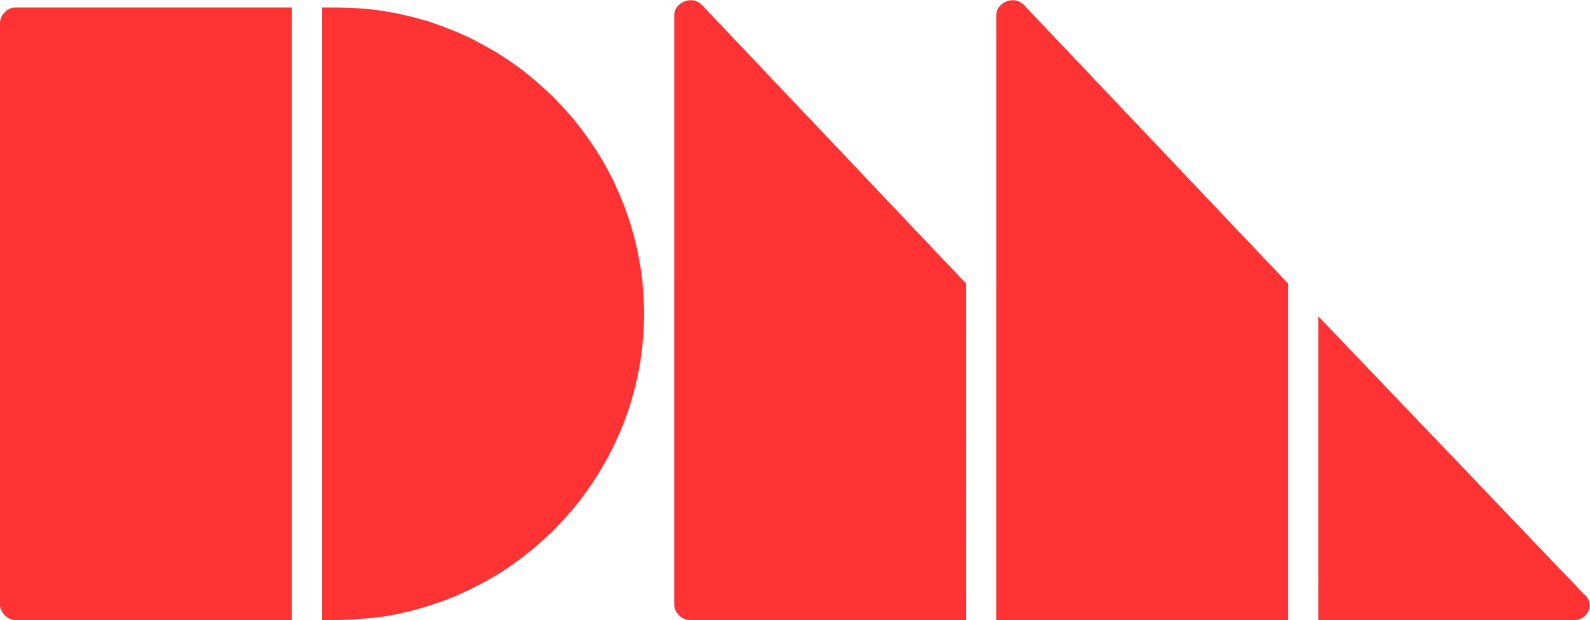 Desktop Metal logo (transparent PNG)